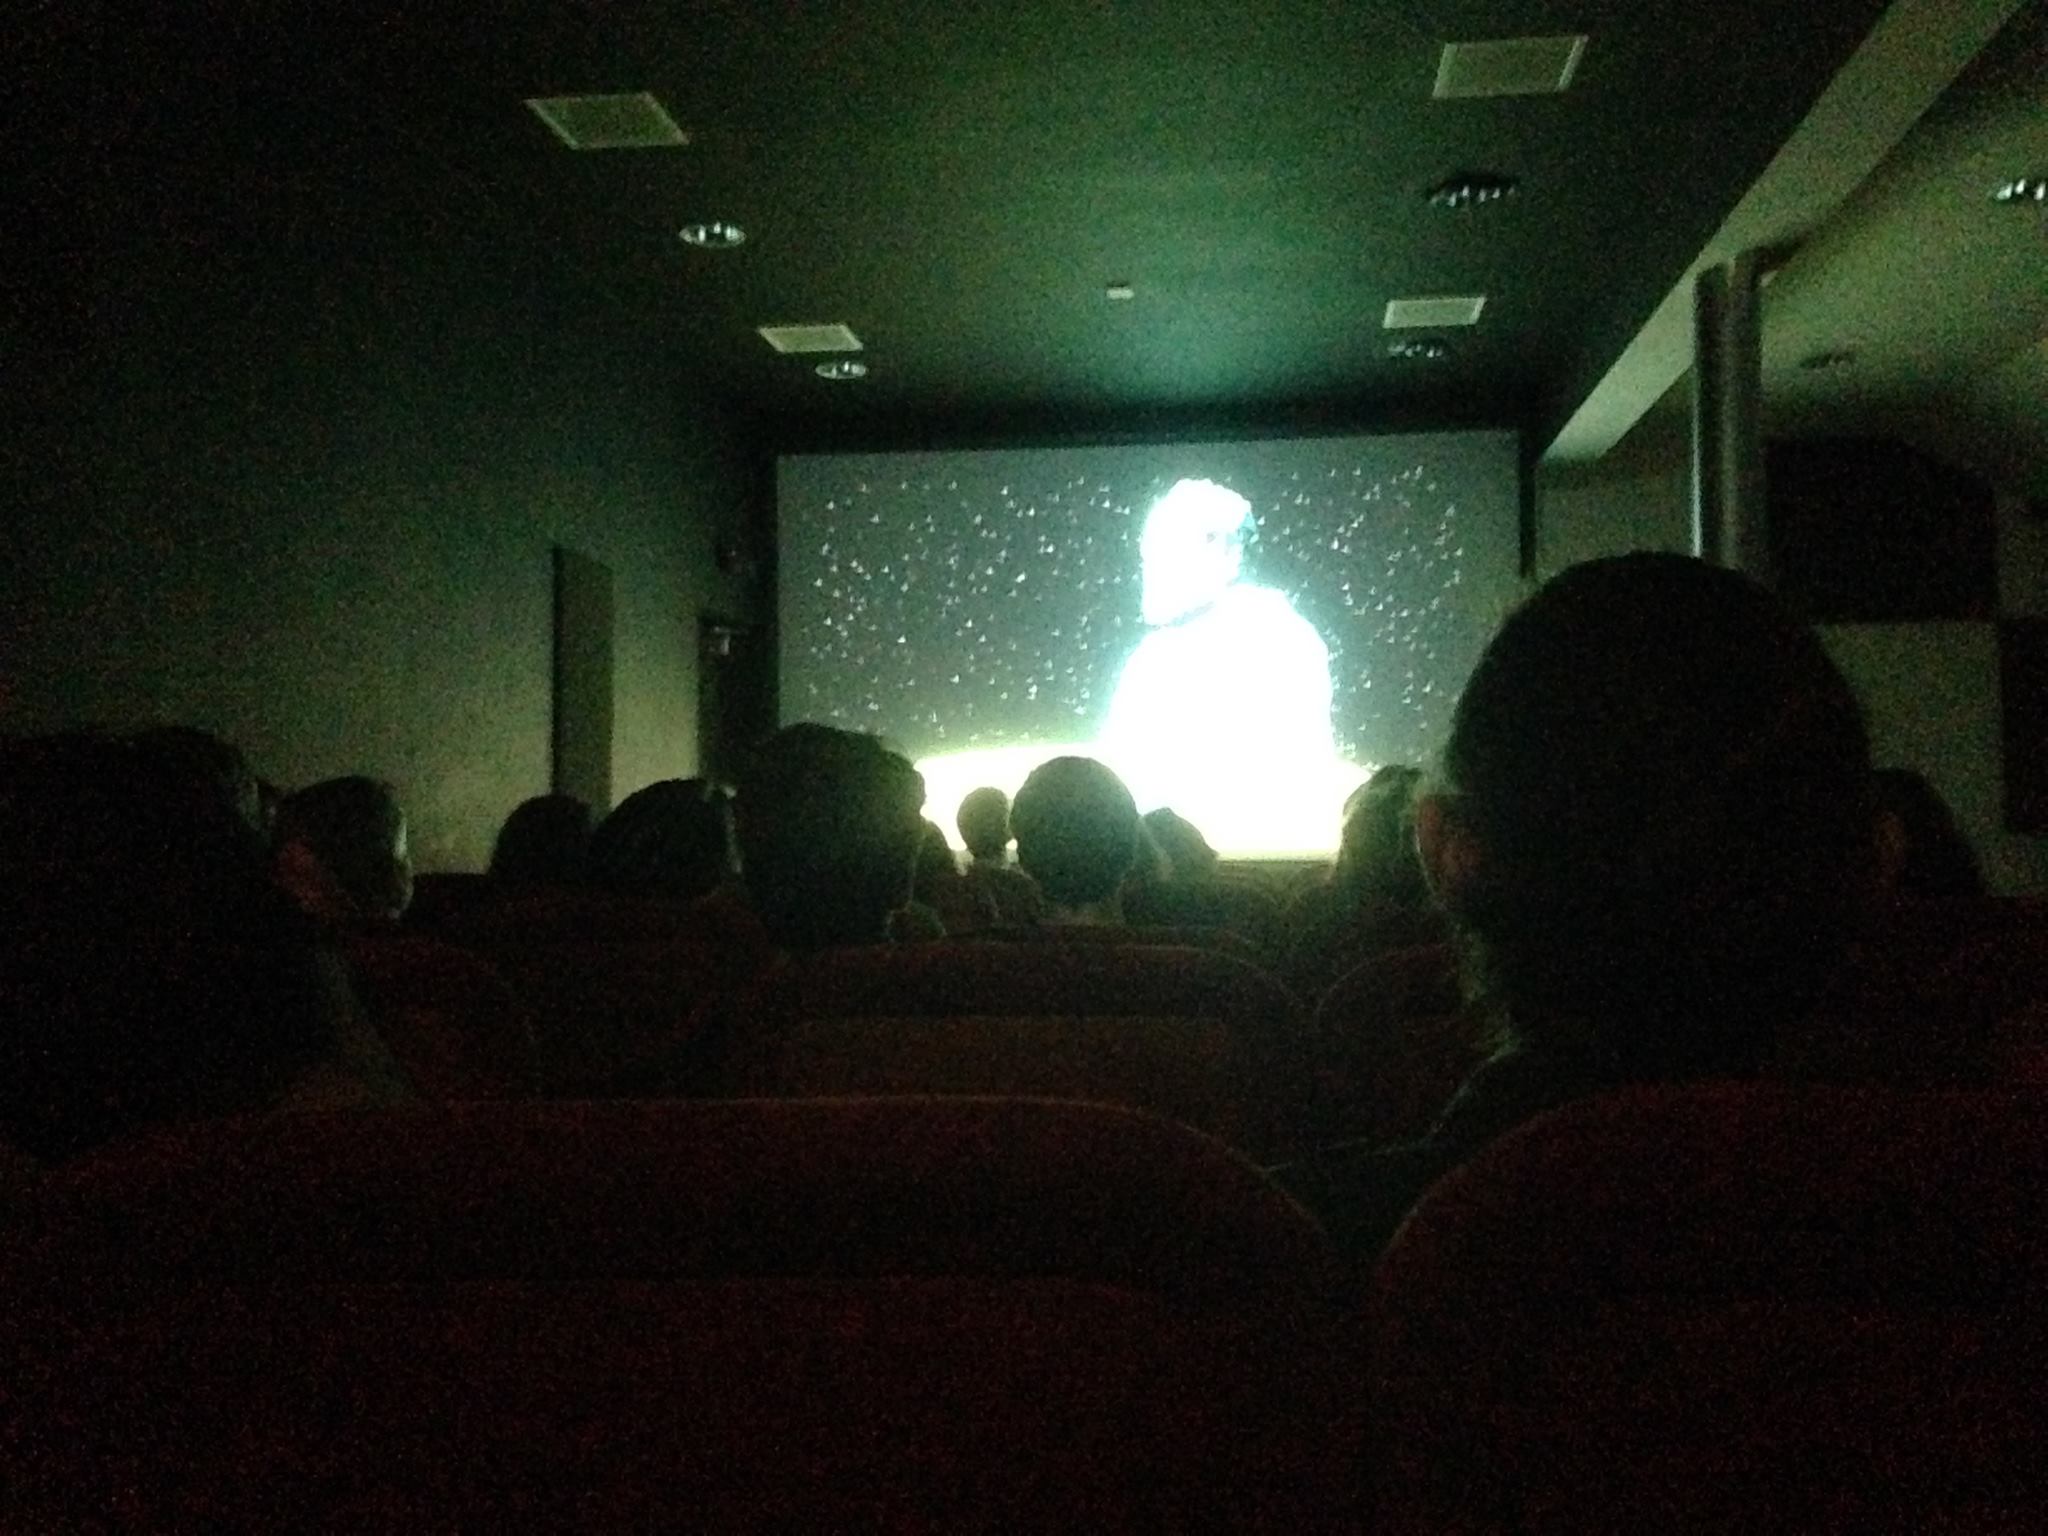 Short film "Cosmico" had its Scottish premiere at celebrated Glasgow film night Café Flicker (photo: John Perivolaris)